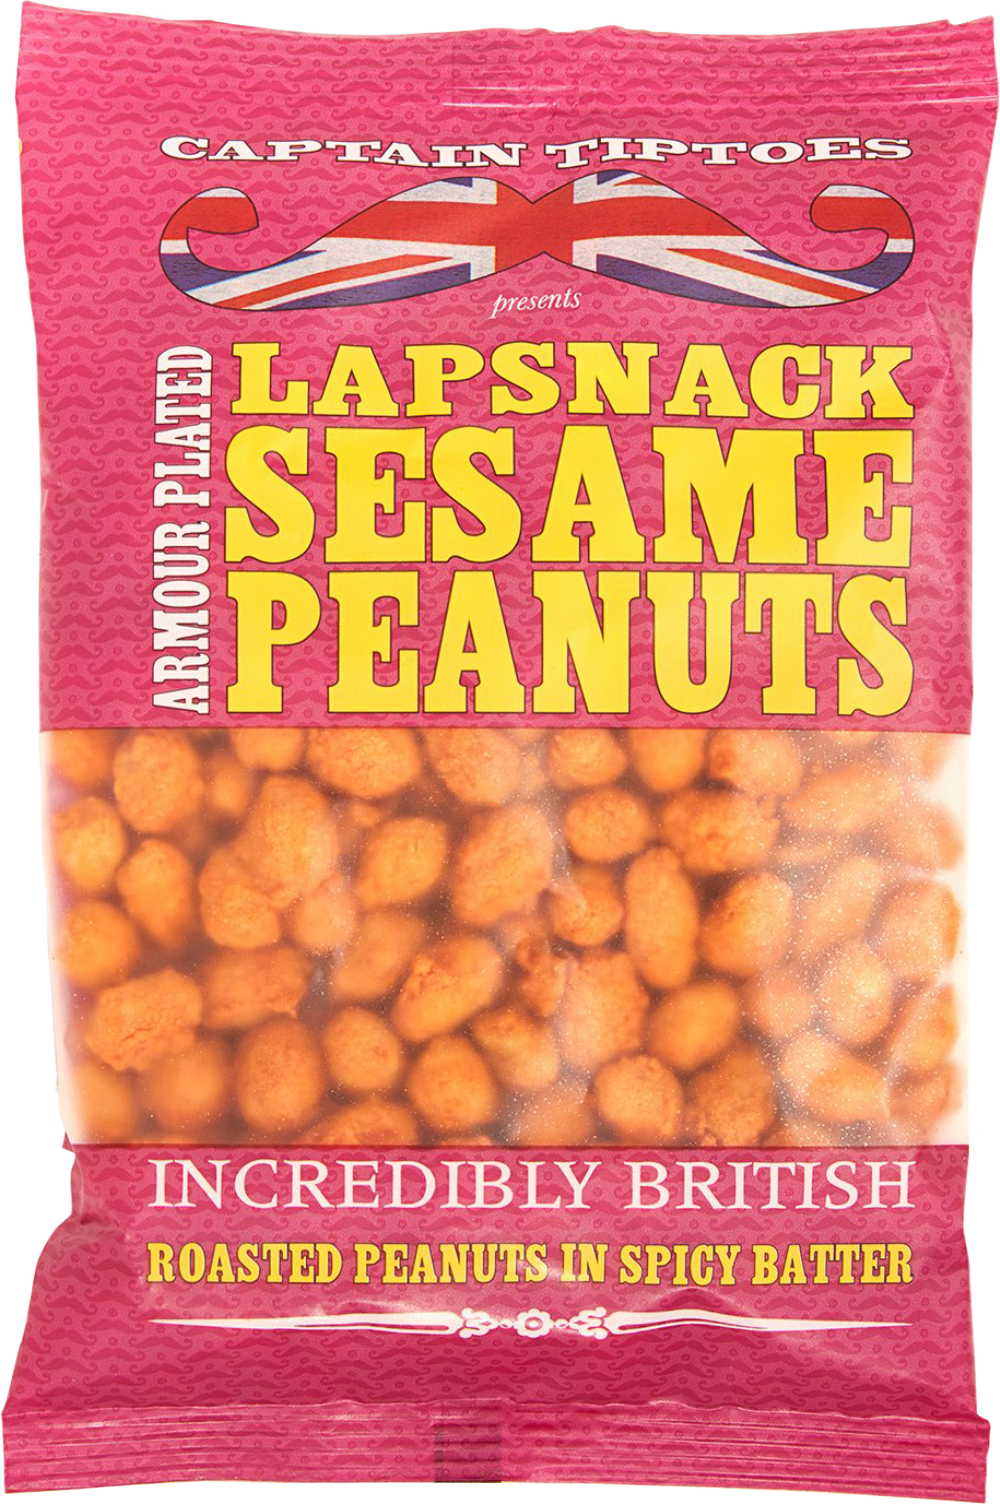 OLIVES ET AL Captain Tiptoes LapSnacks Sesame Peanuts 200g